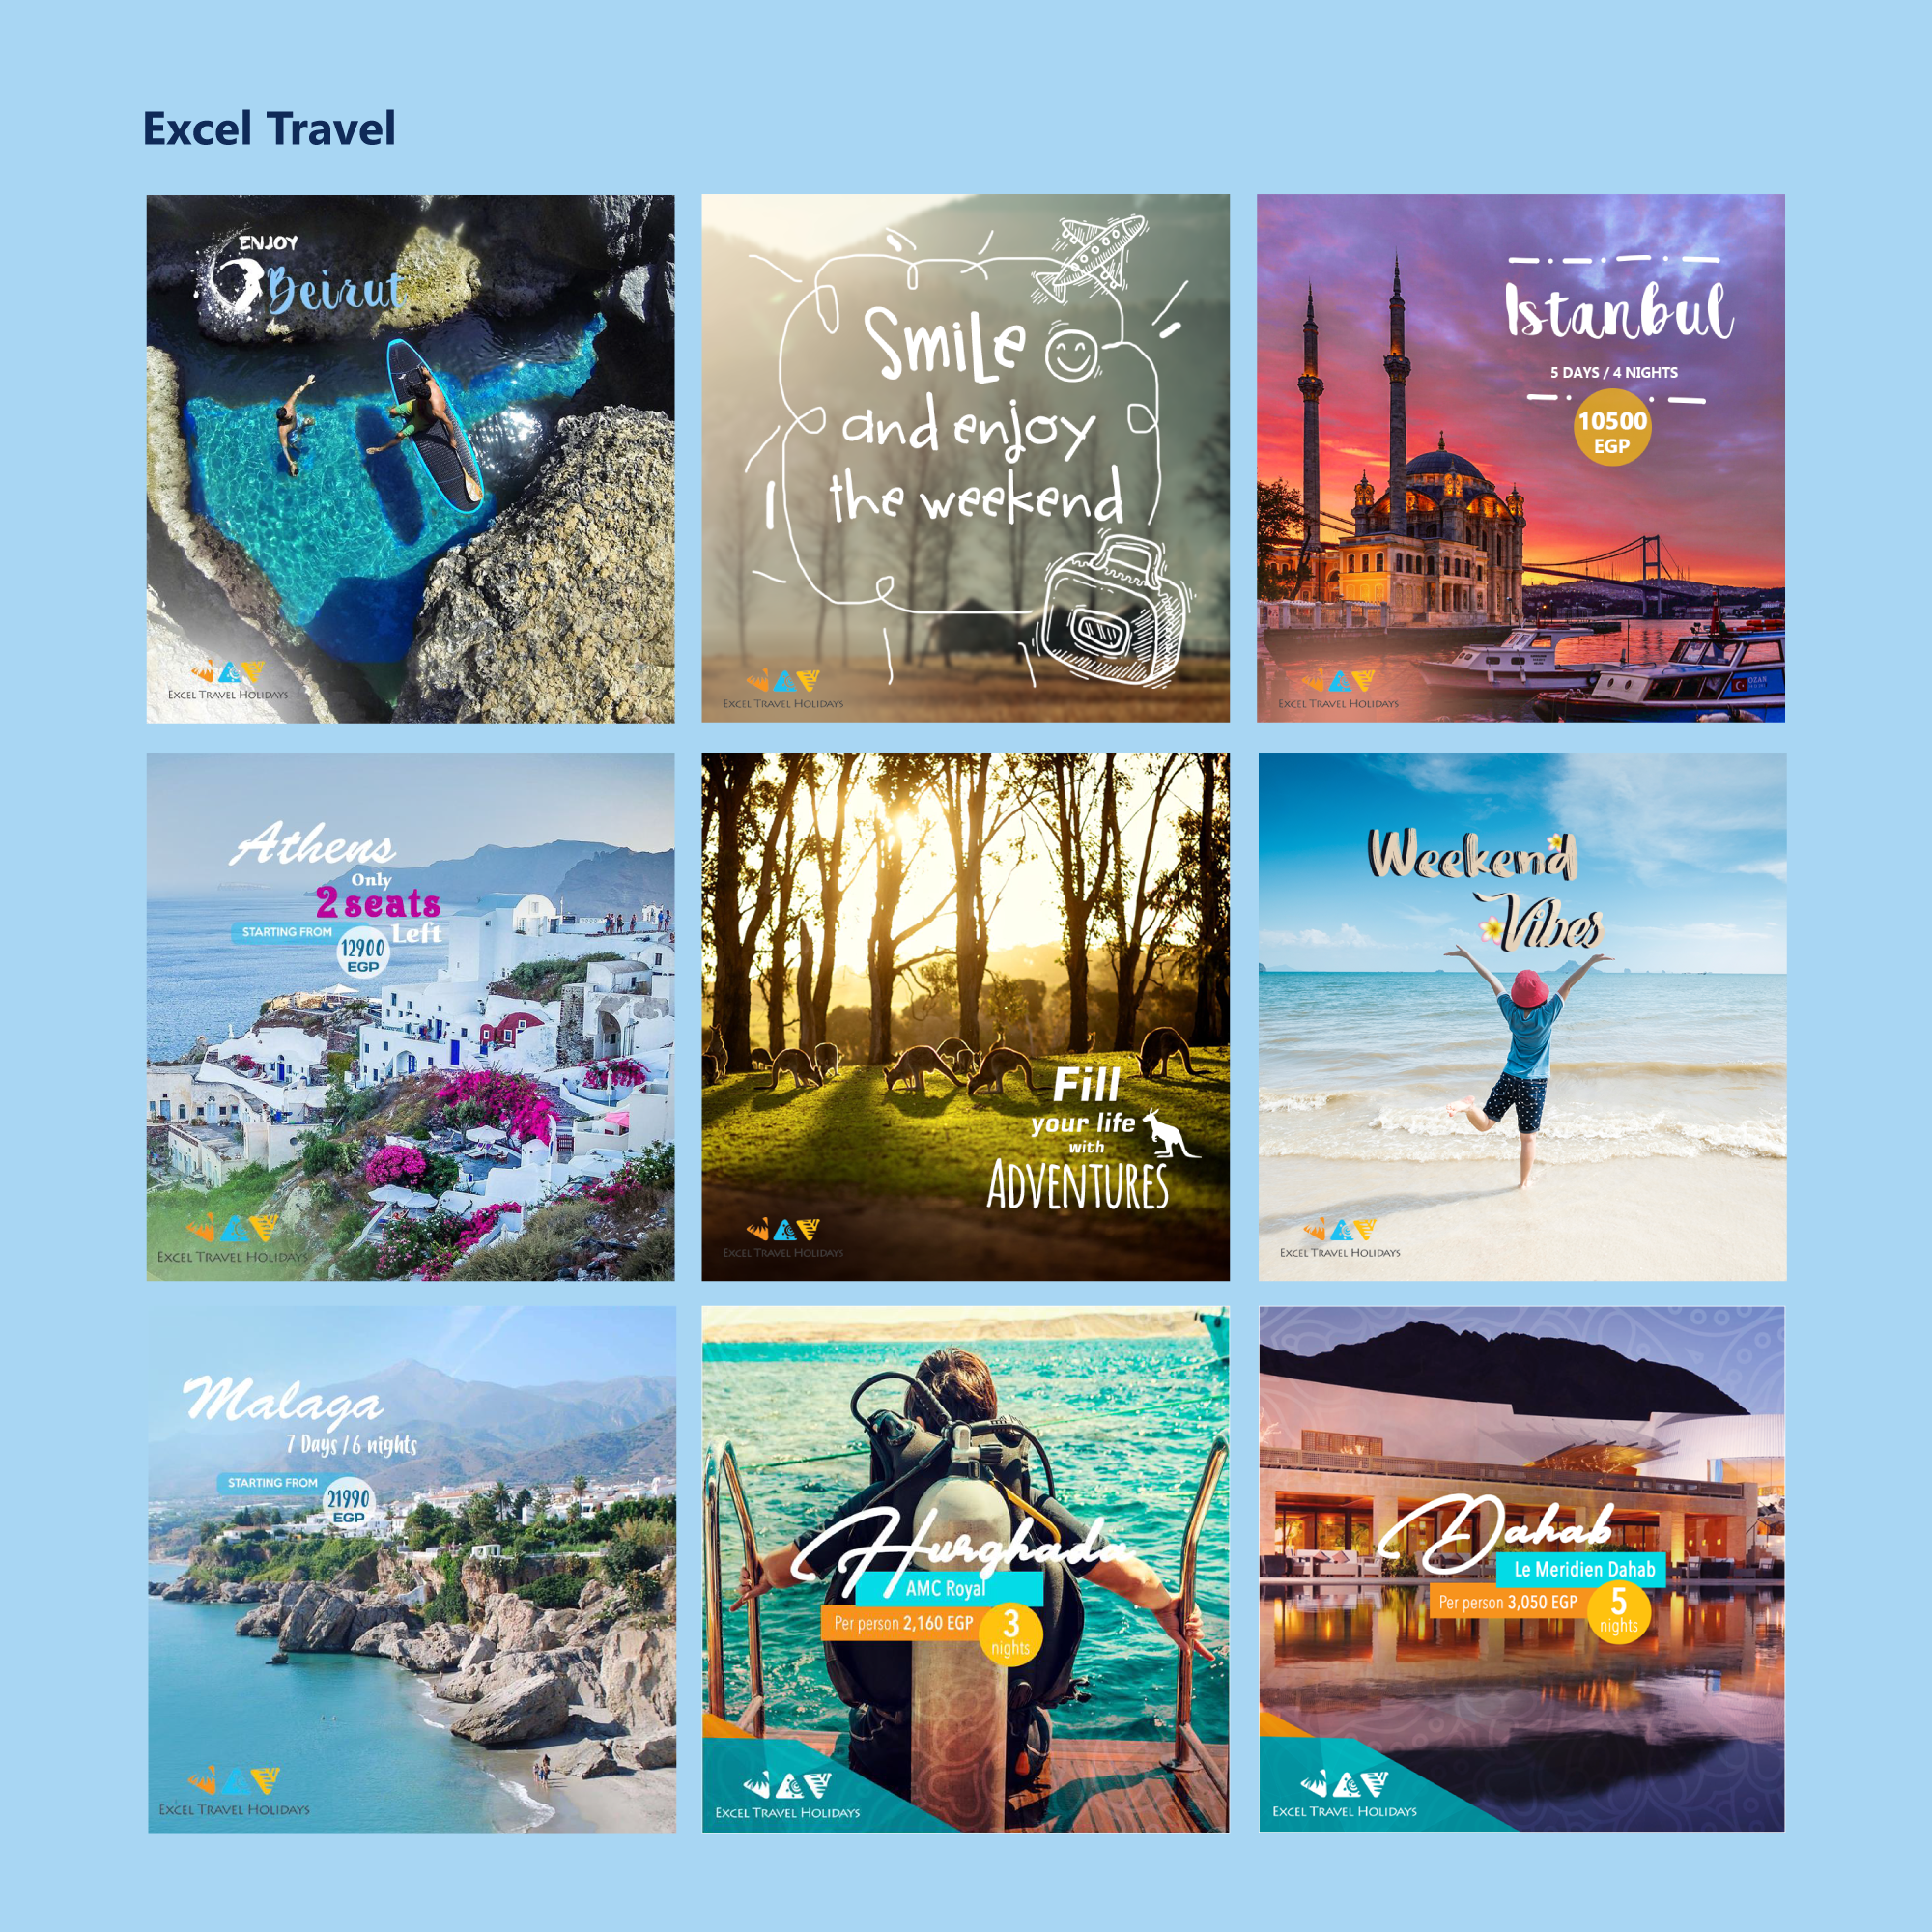 Social Media Designs For Excel Travel in 2018